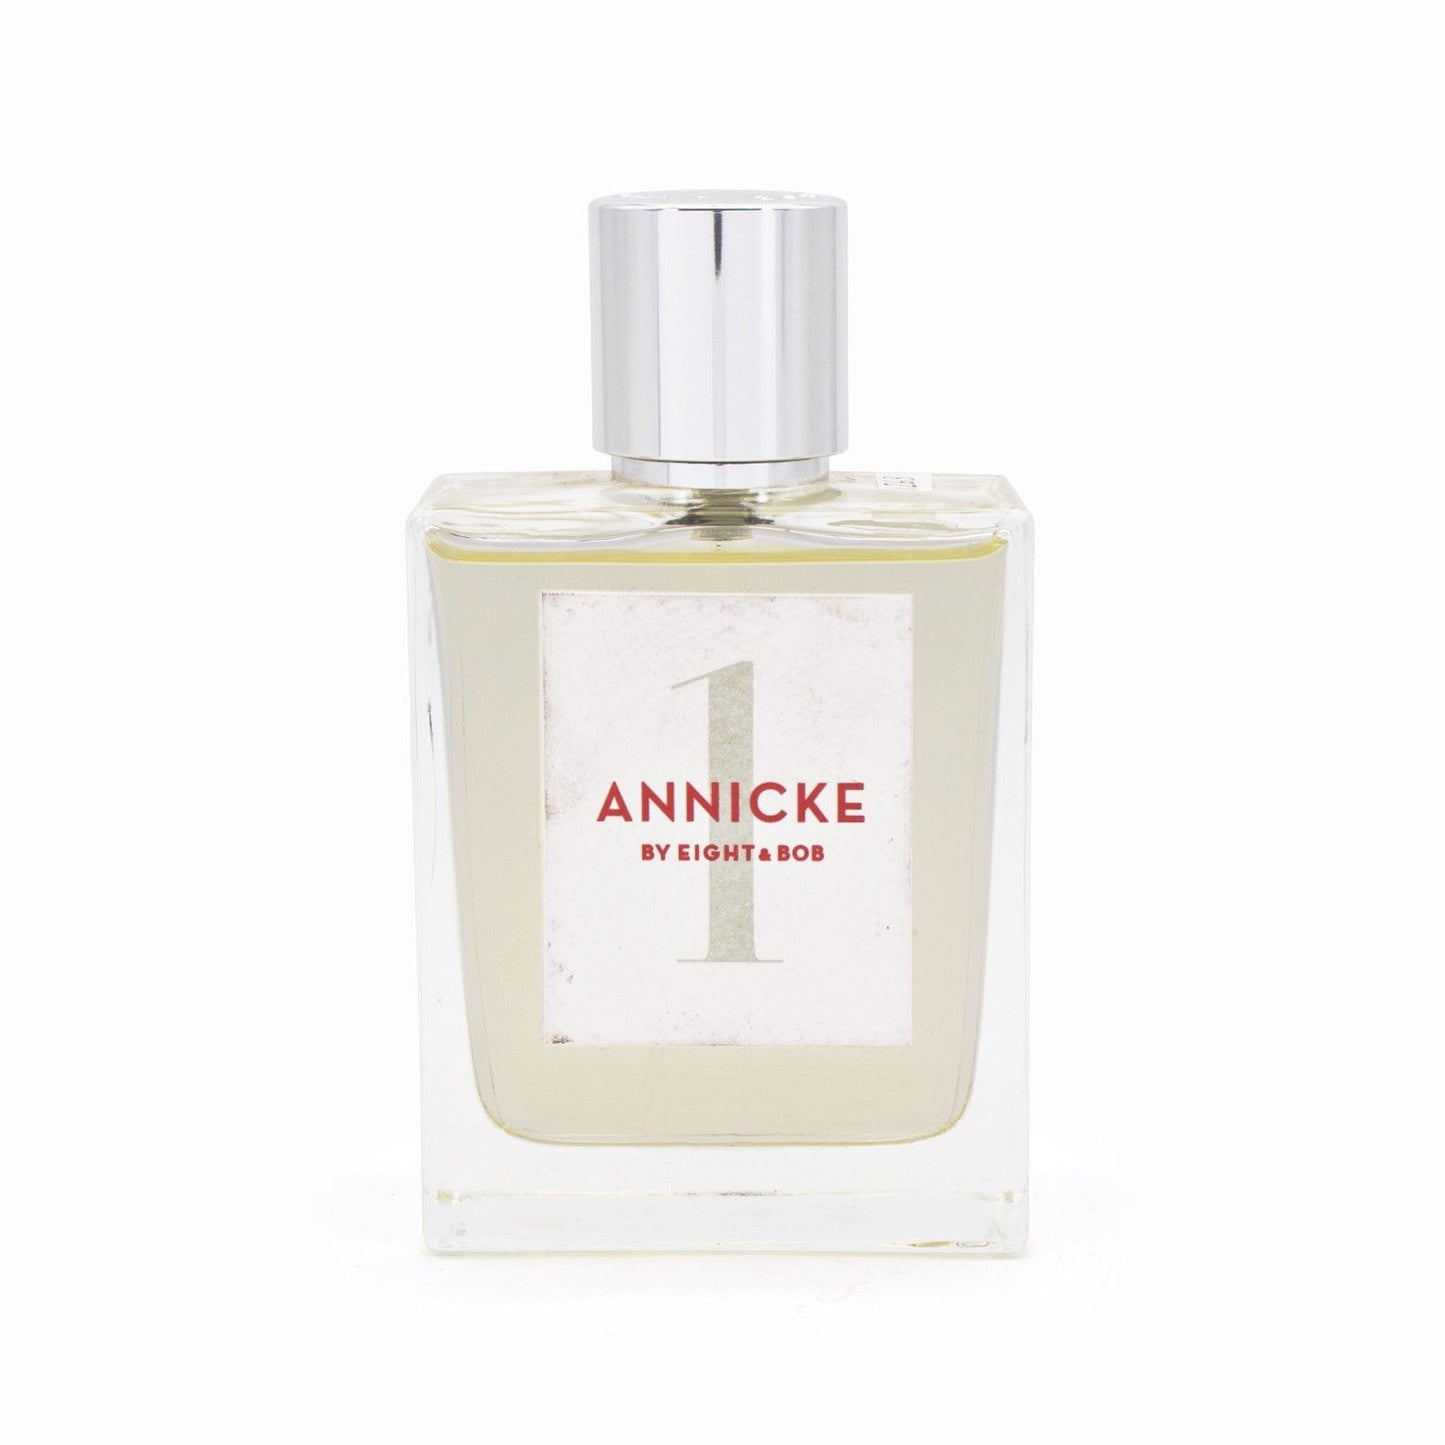 Eight & Bob Annicke 1 Eau de Parfum 100ml - Missing Box